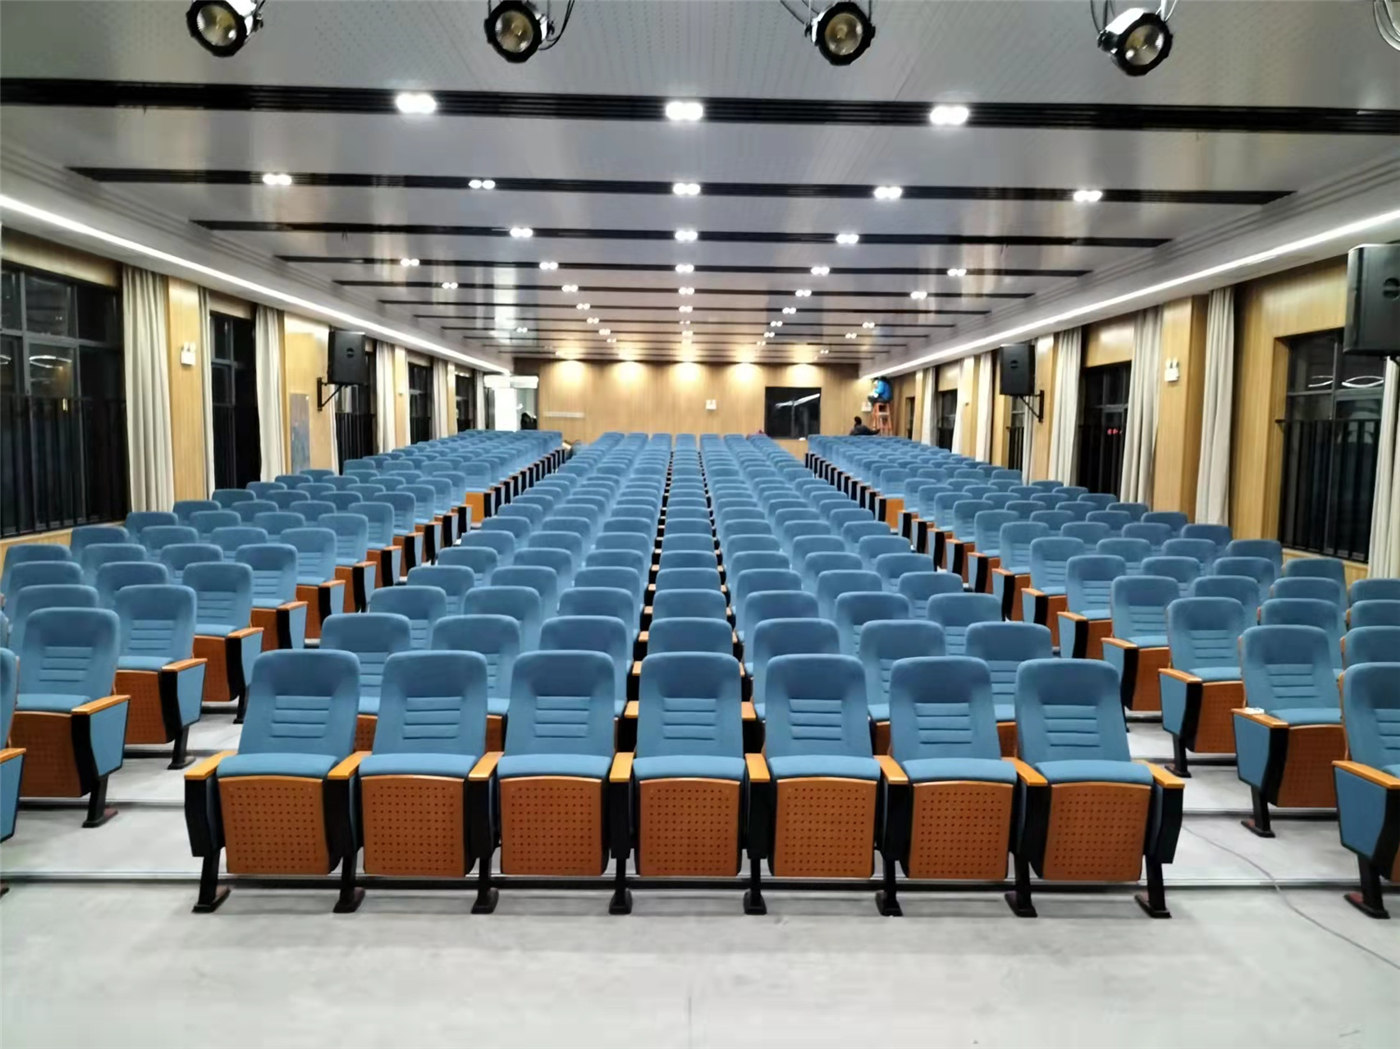 Ciptakan Kesan Abadi dengan Solusi Tempat Duduk Auditorium Mewah dari Produsen Terhormat1